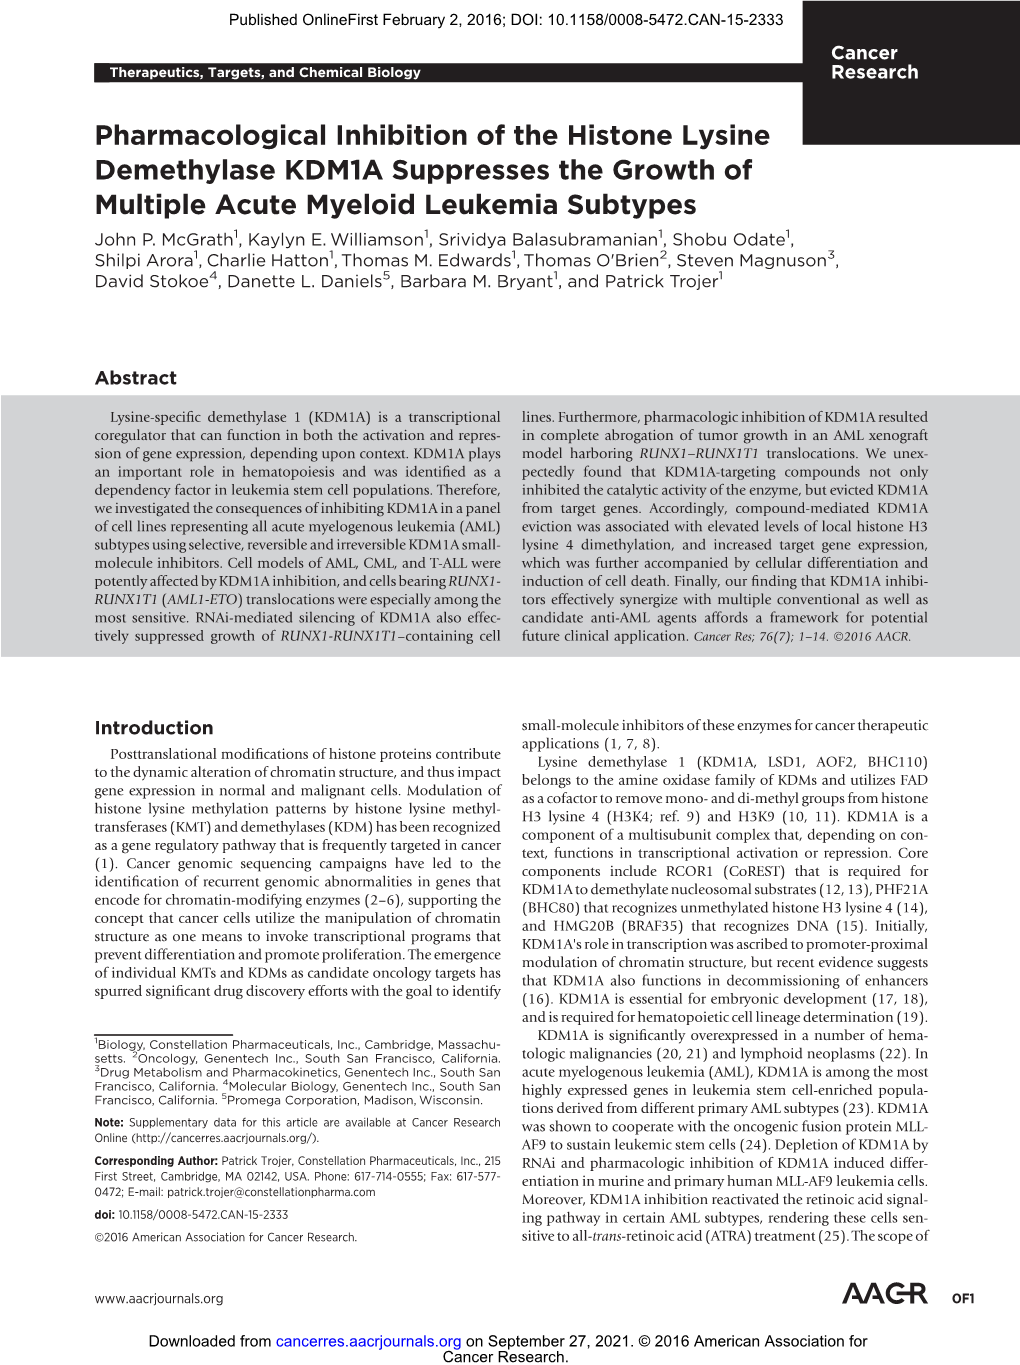 Pharmacological Inhibition of the Histone Lysine Demethylase KDM1A Suppresses the Growth of Multiple Acute Myeloid Leukemia Subtypes John P